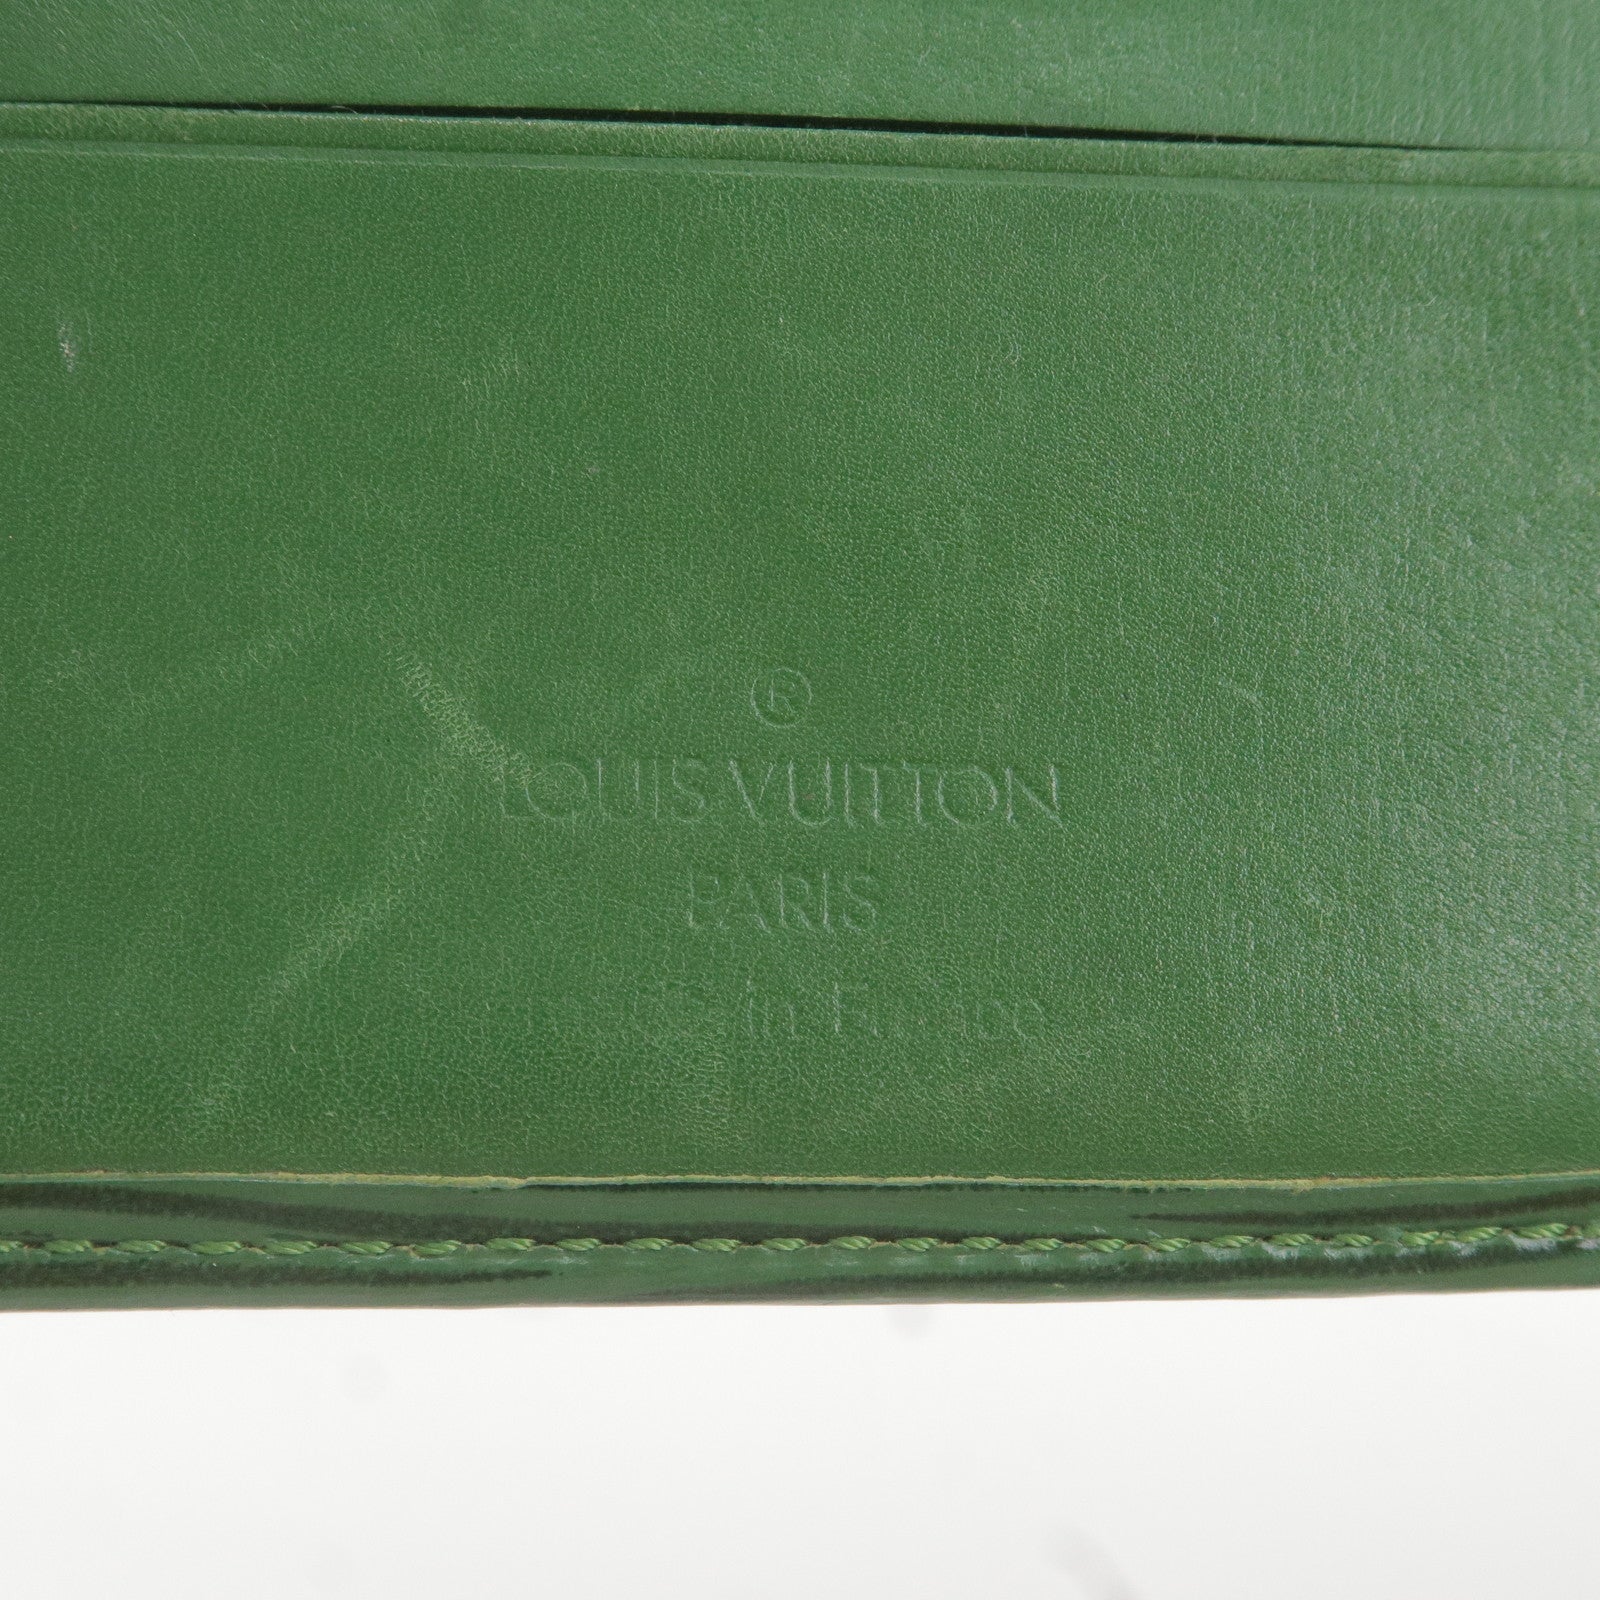 Louis Vuitton City Keepall Handbag Monogram Eclipse and Monogram